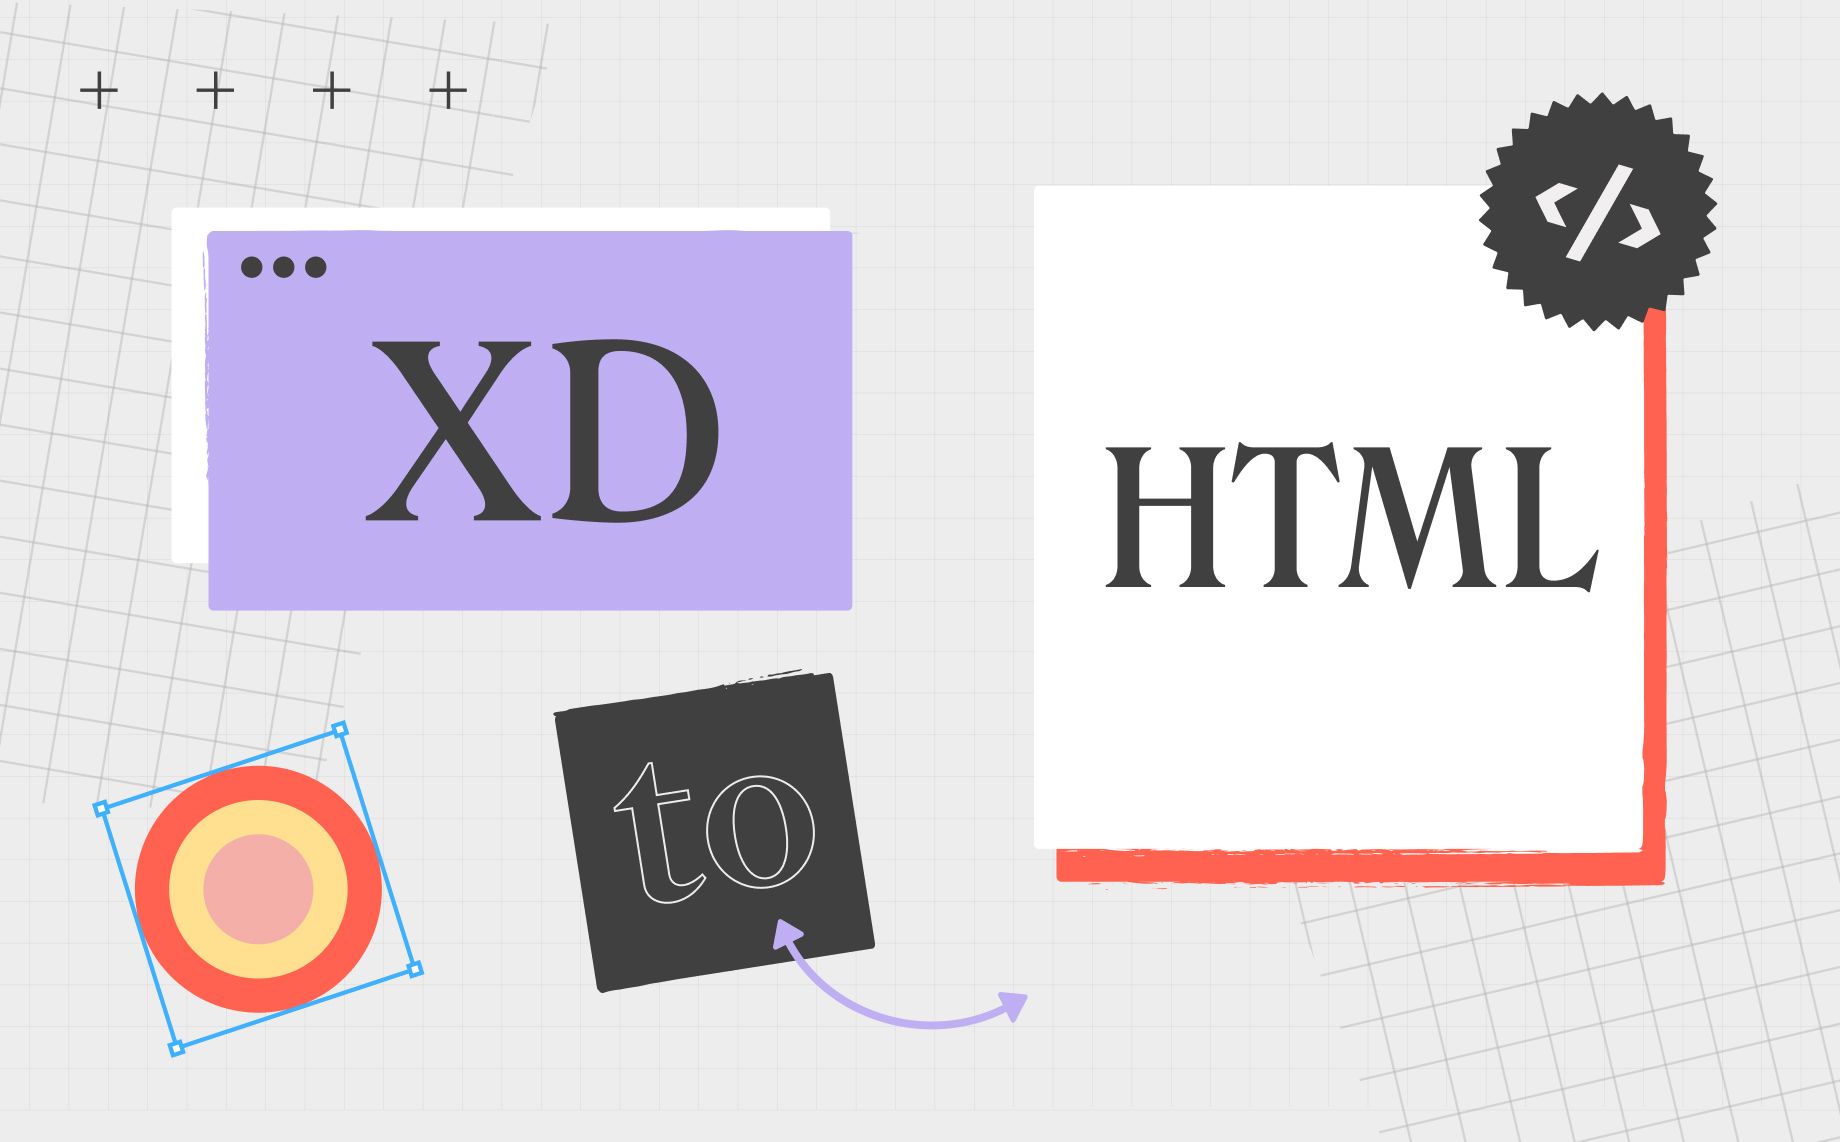 adobe xd export to html